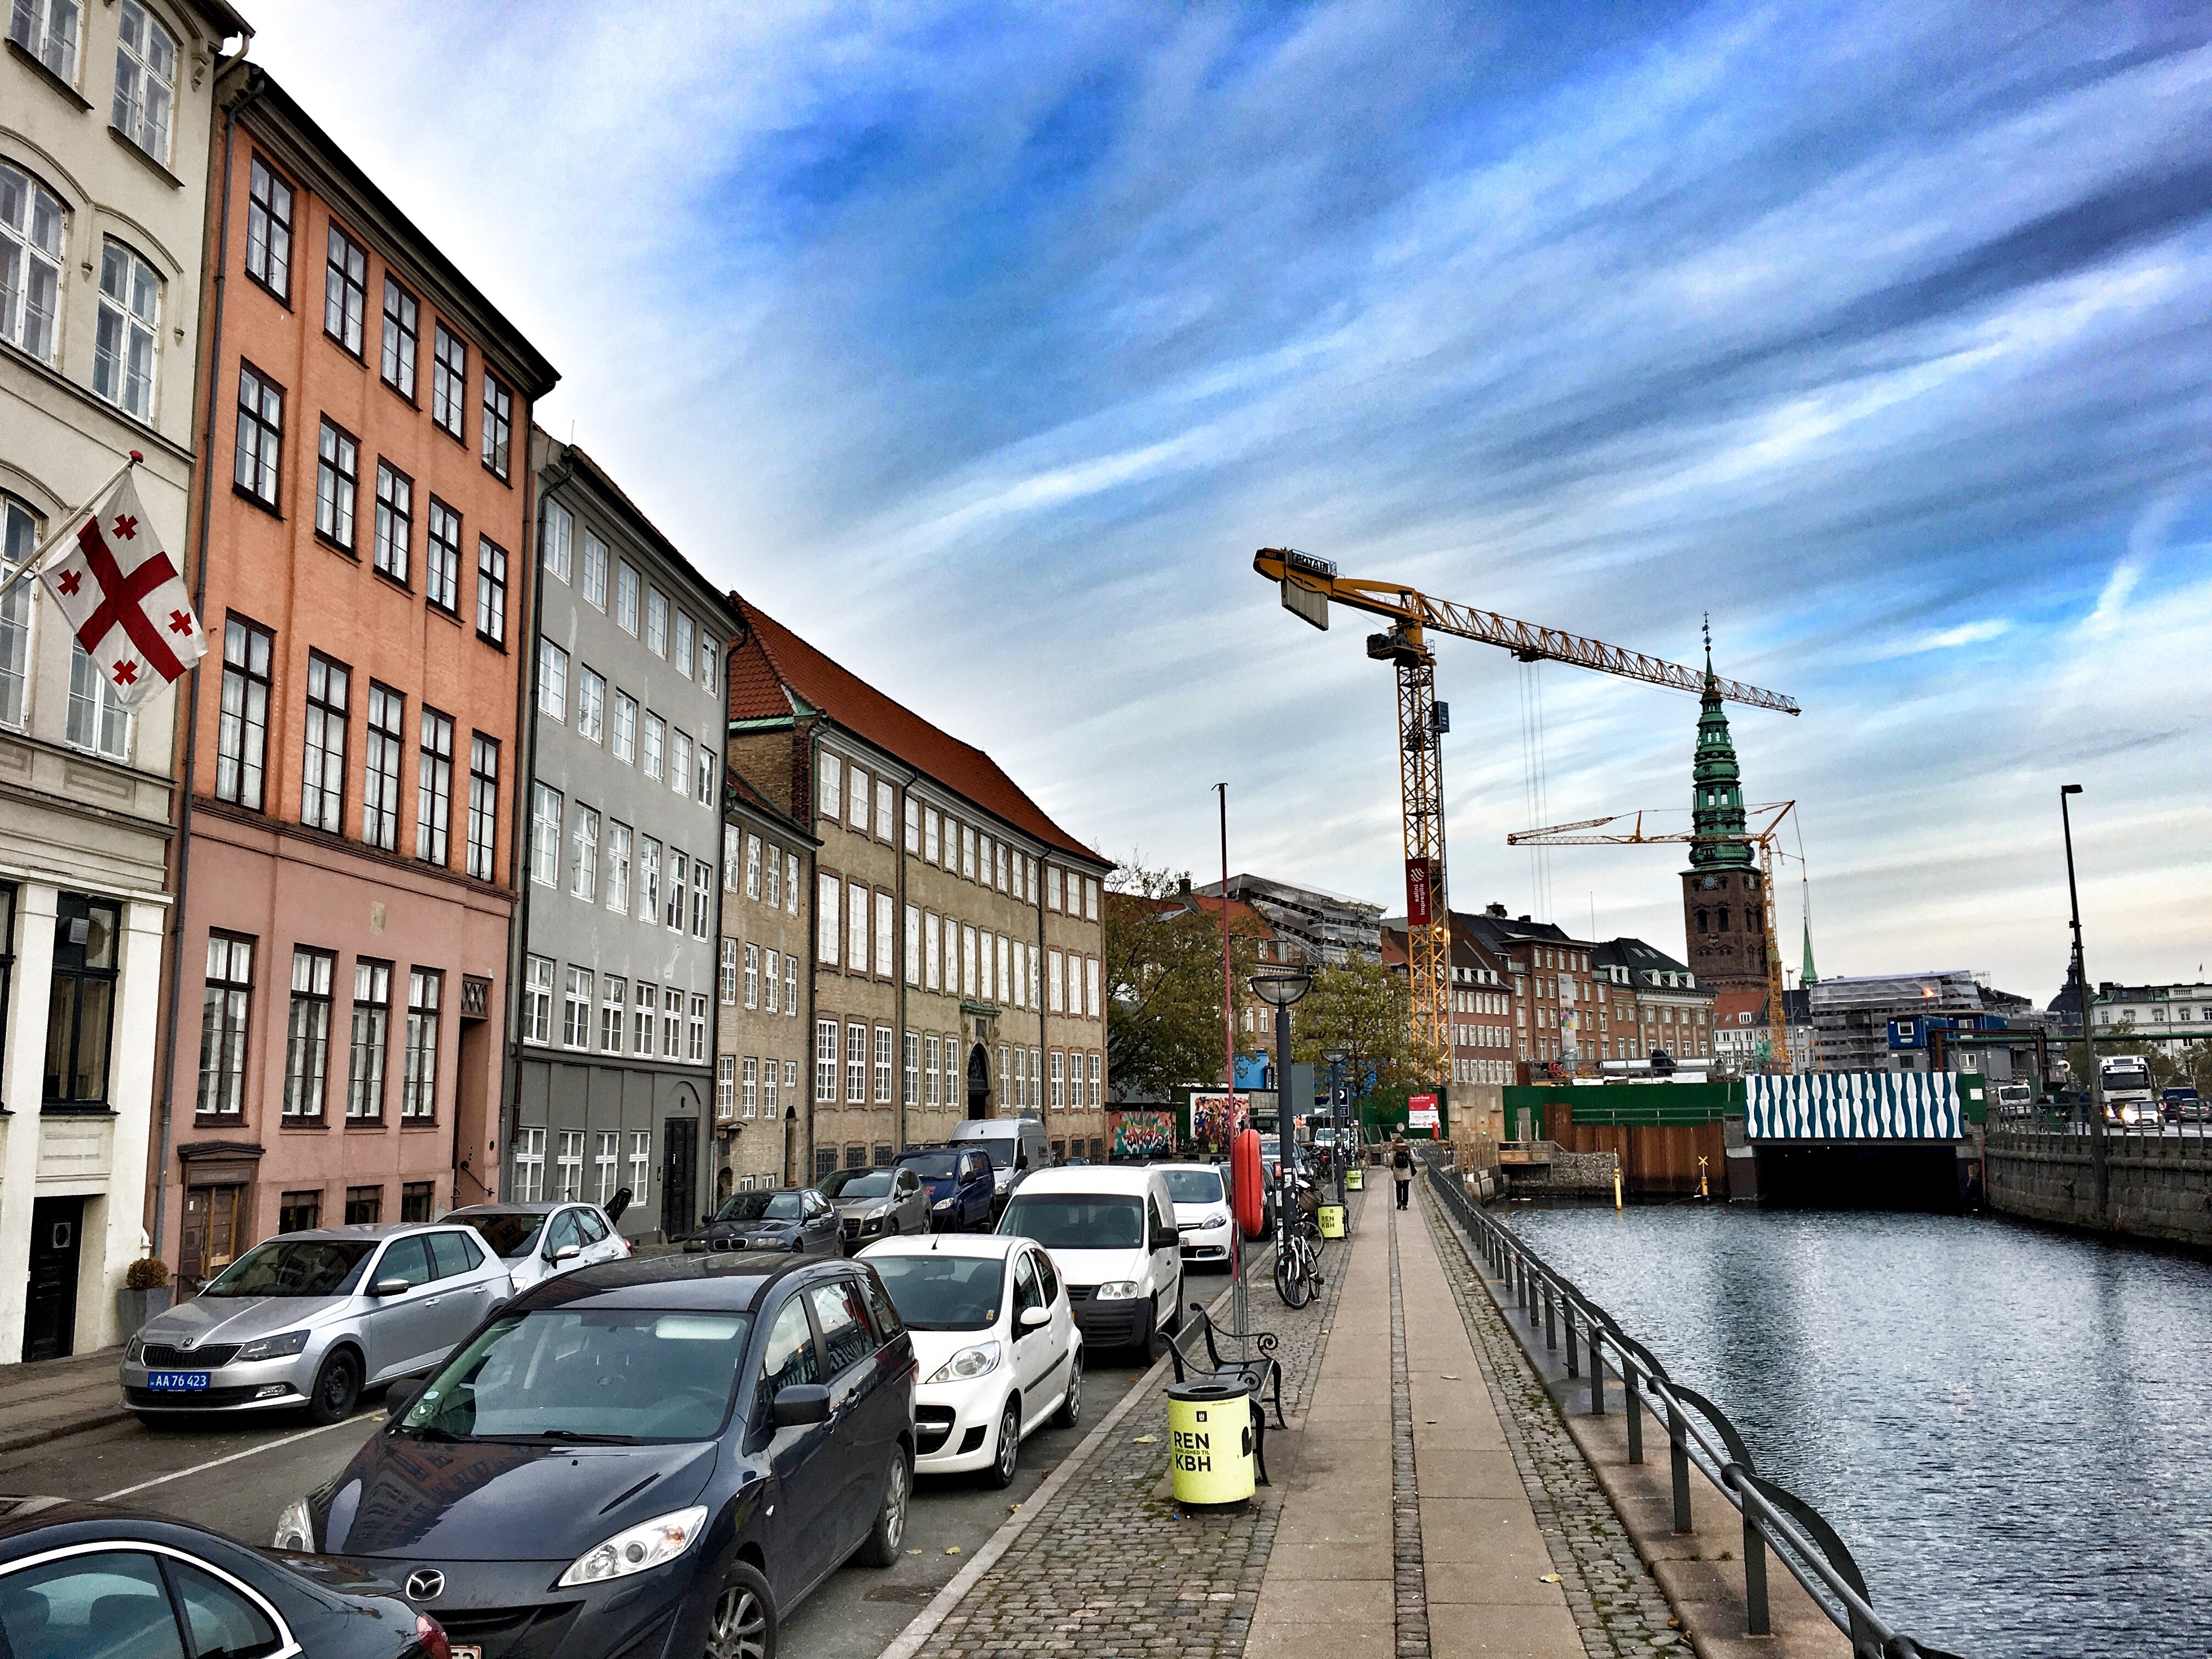 Copenhagen feels left out of enormous infrastructure plans